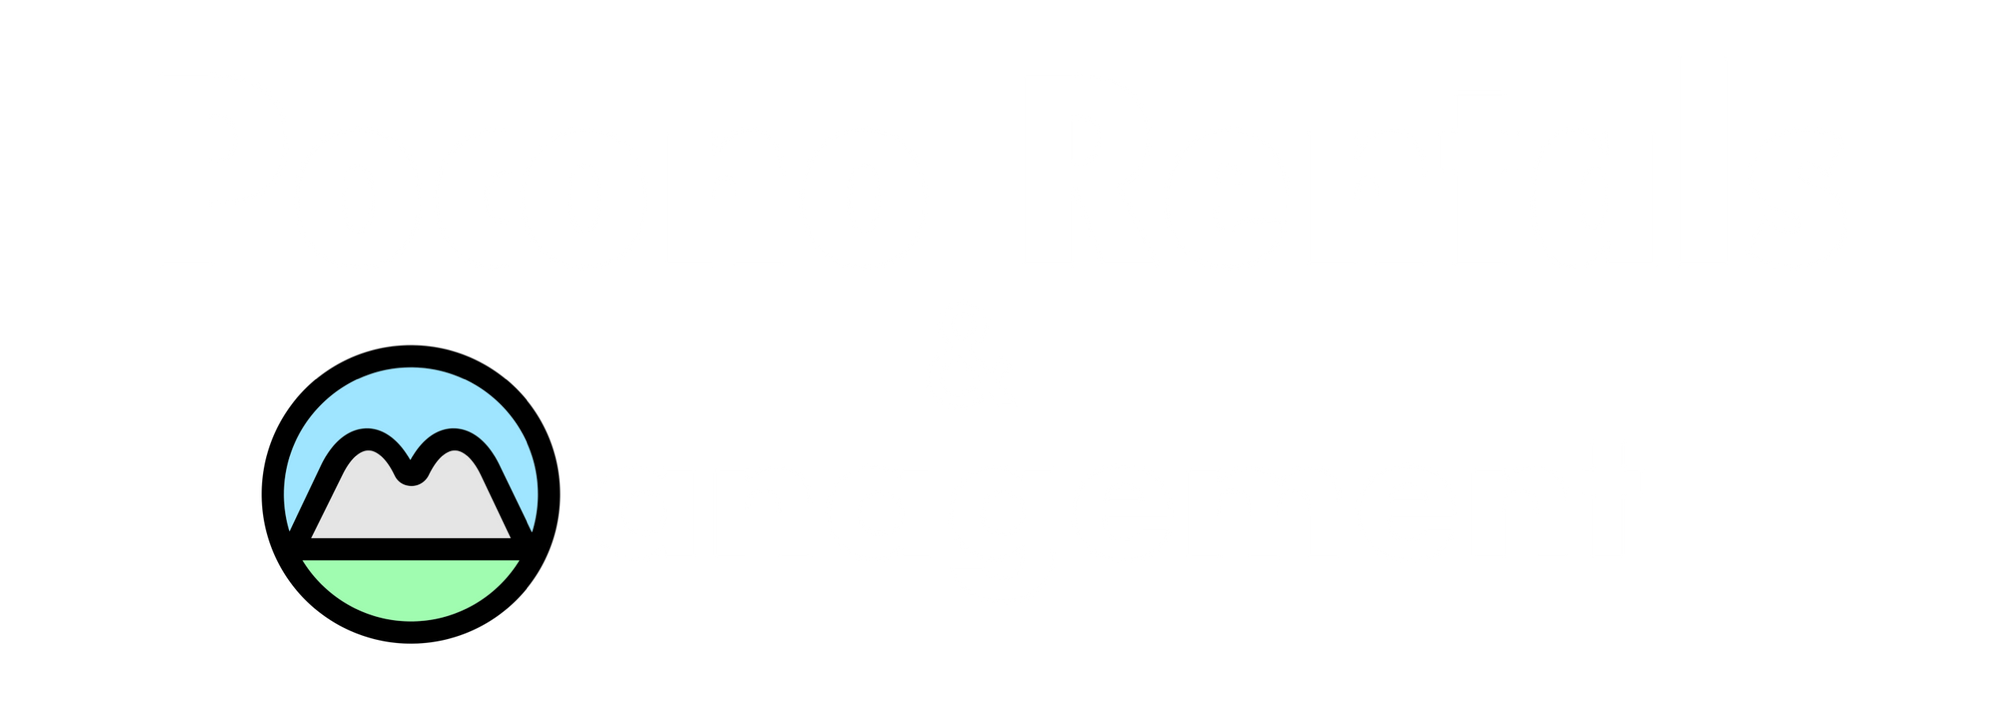 Pocono Rental Management